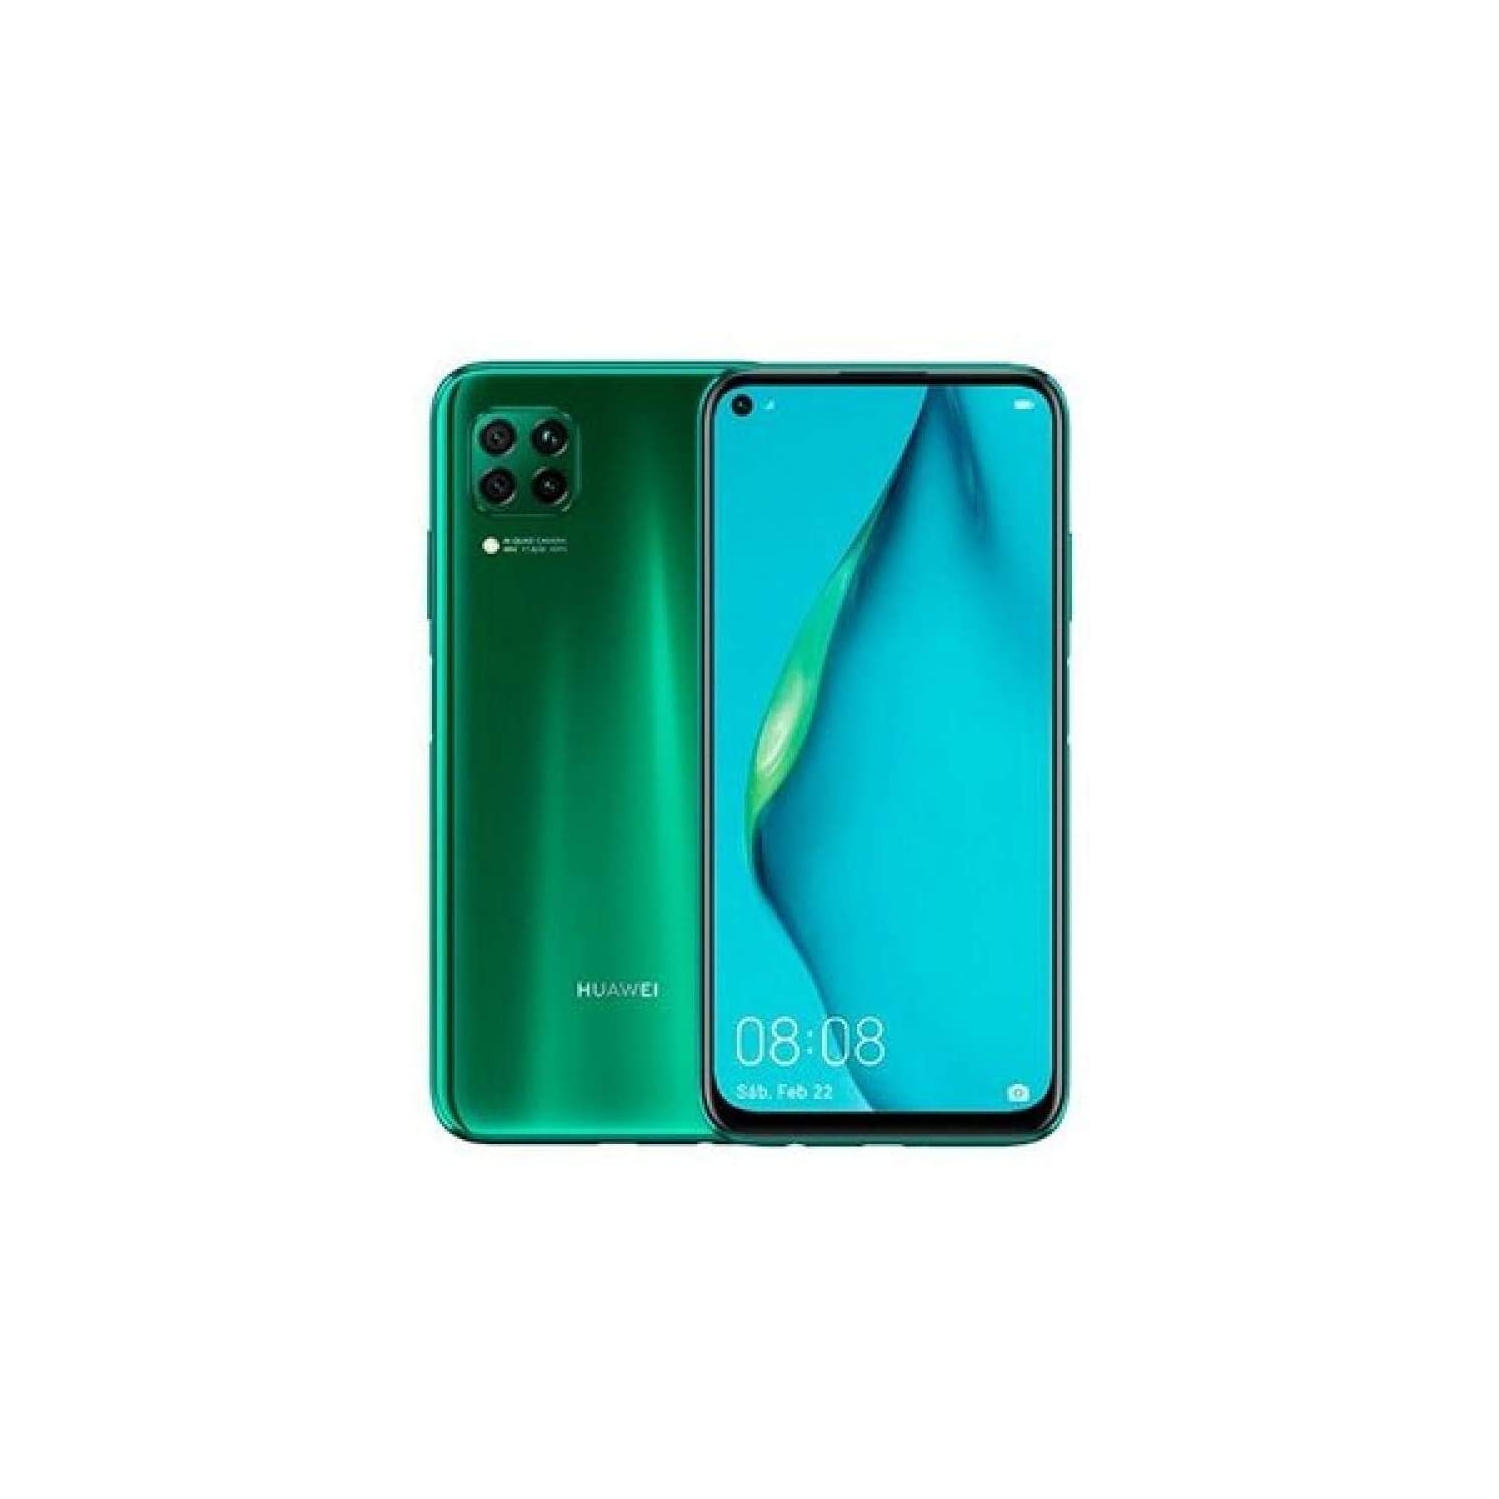 Huawei P40 Lite 6.4" 128/6GB RAM - GSM Unlocked Smartphone - International Model - Open Box - Green